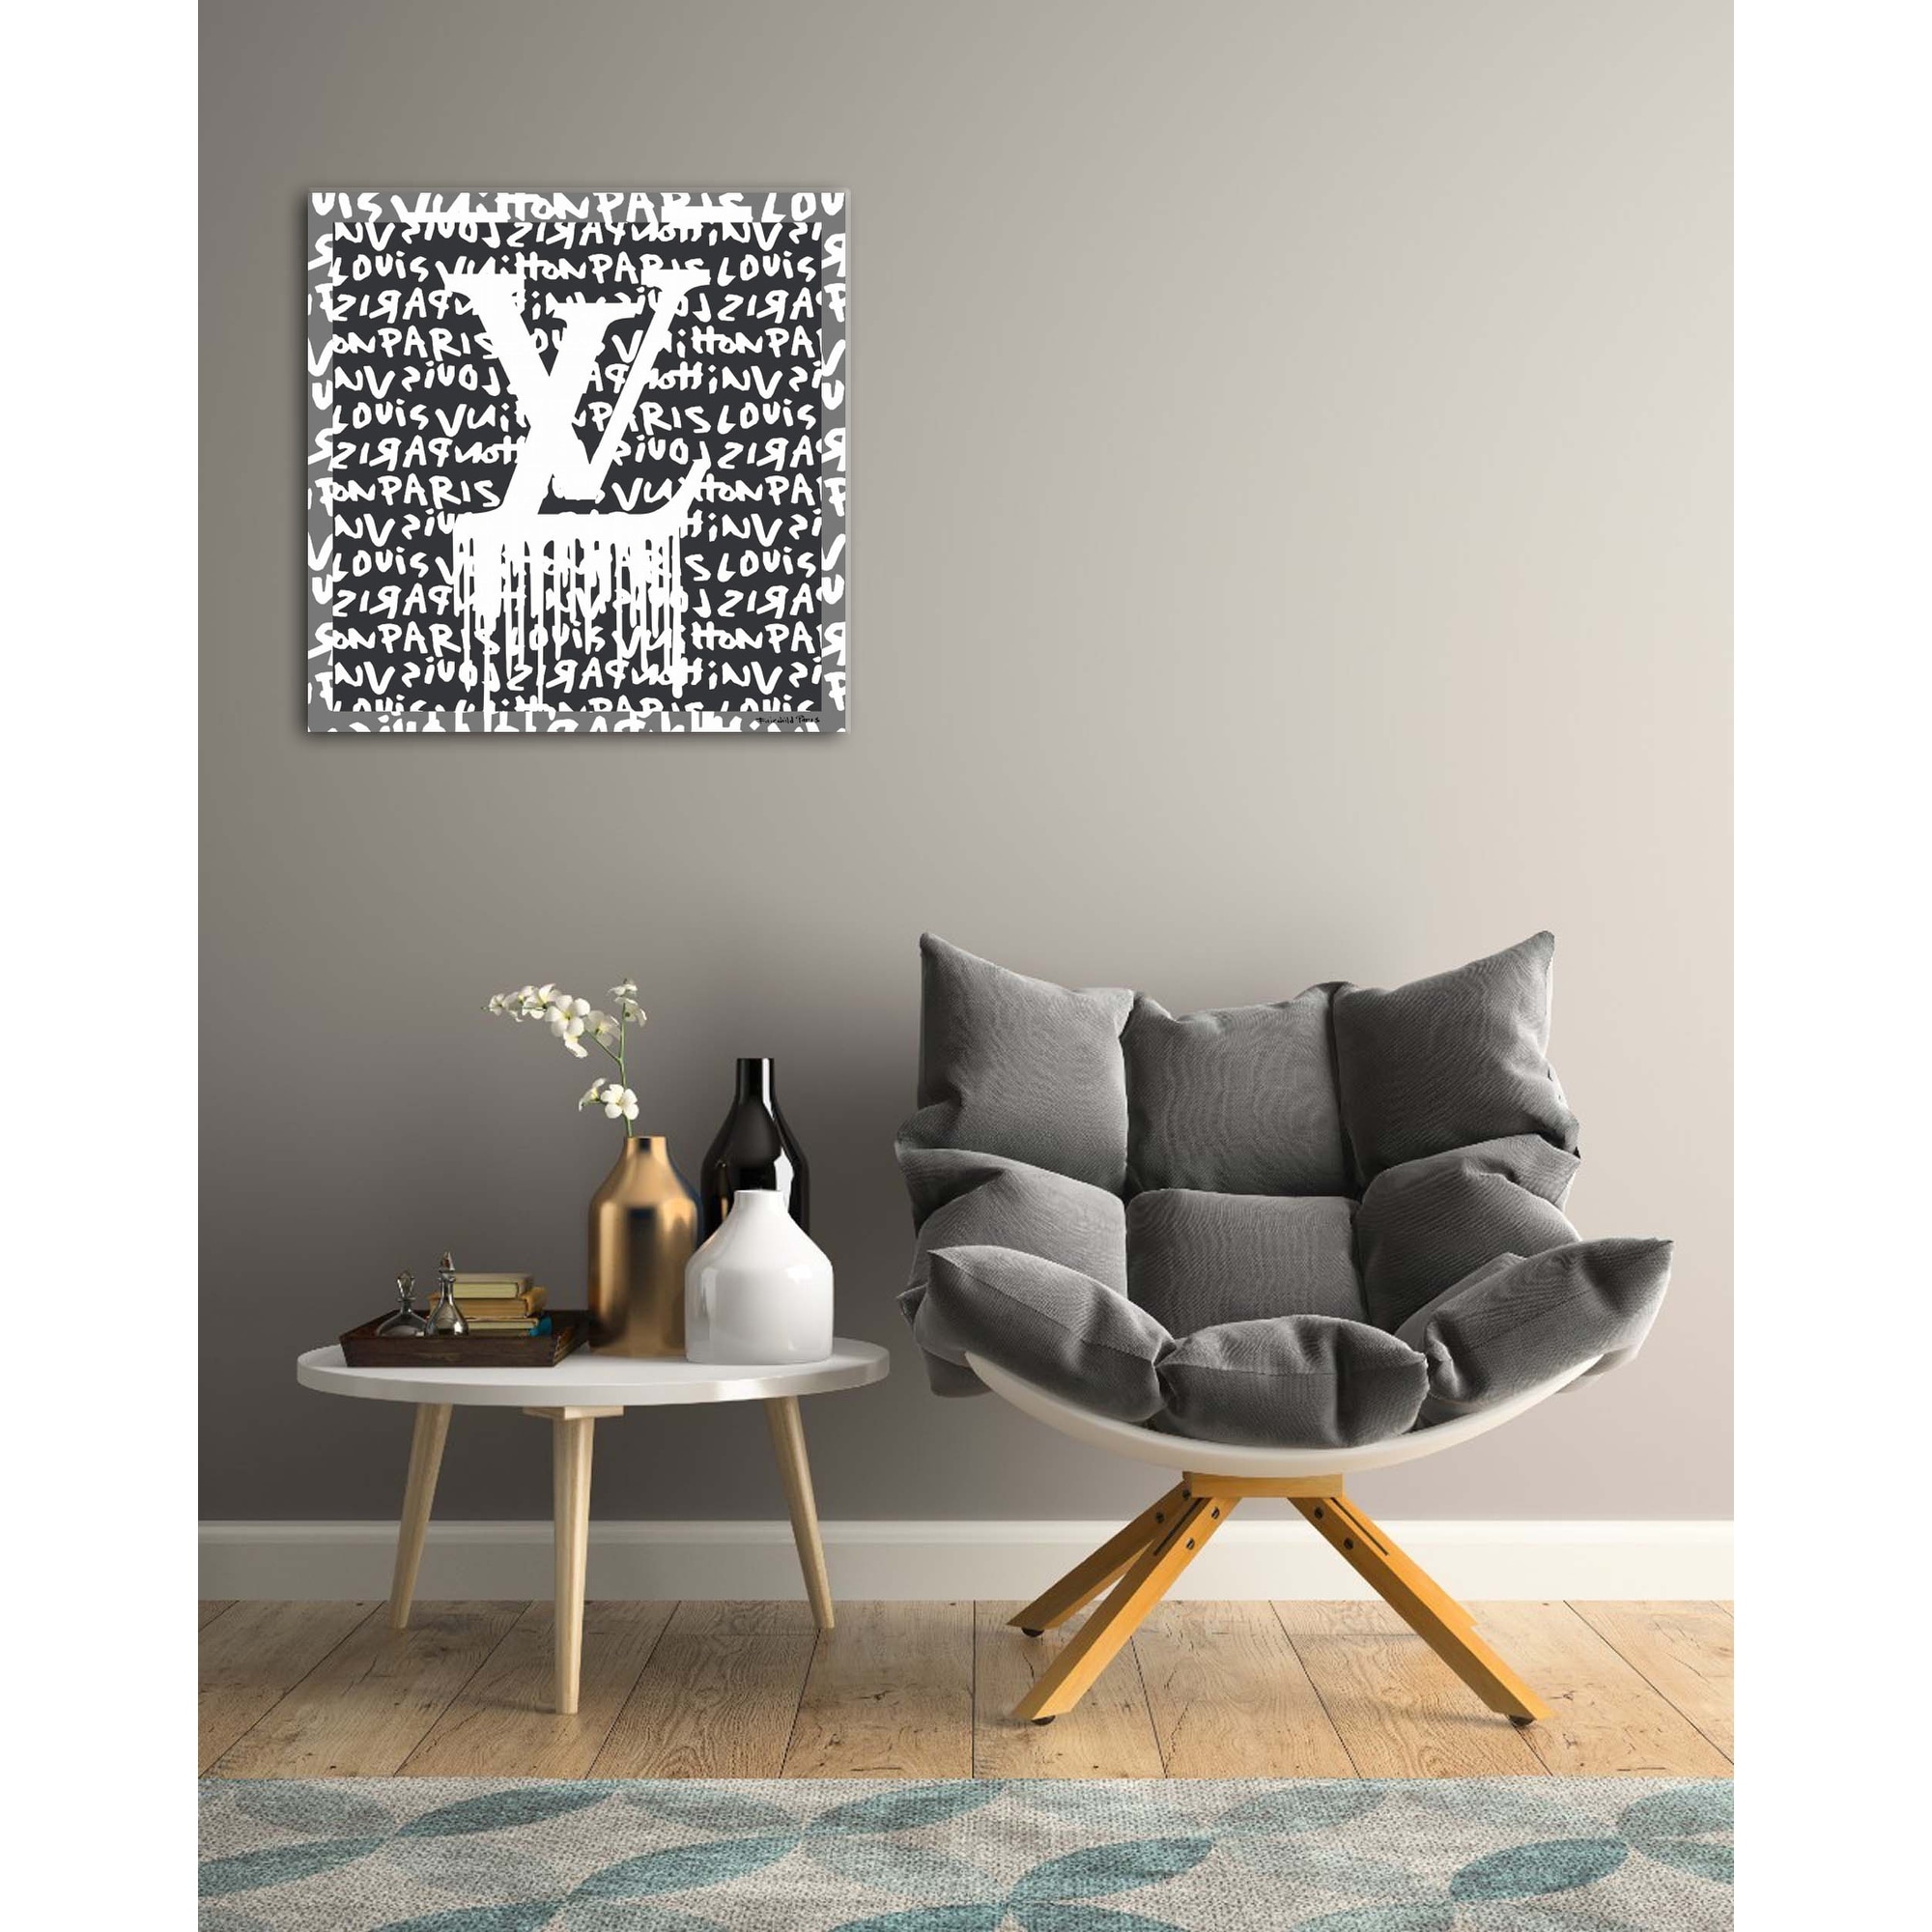 Framed Canvas Art - Louis Vuitton Logo Lips Pattern Square by Julie Schreiber ( Fashion > Fashion Brands > Louis Vuitton art) - 18x18 in